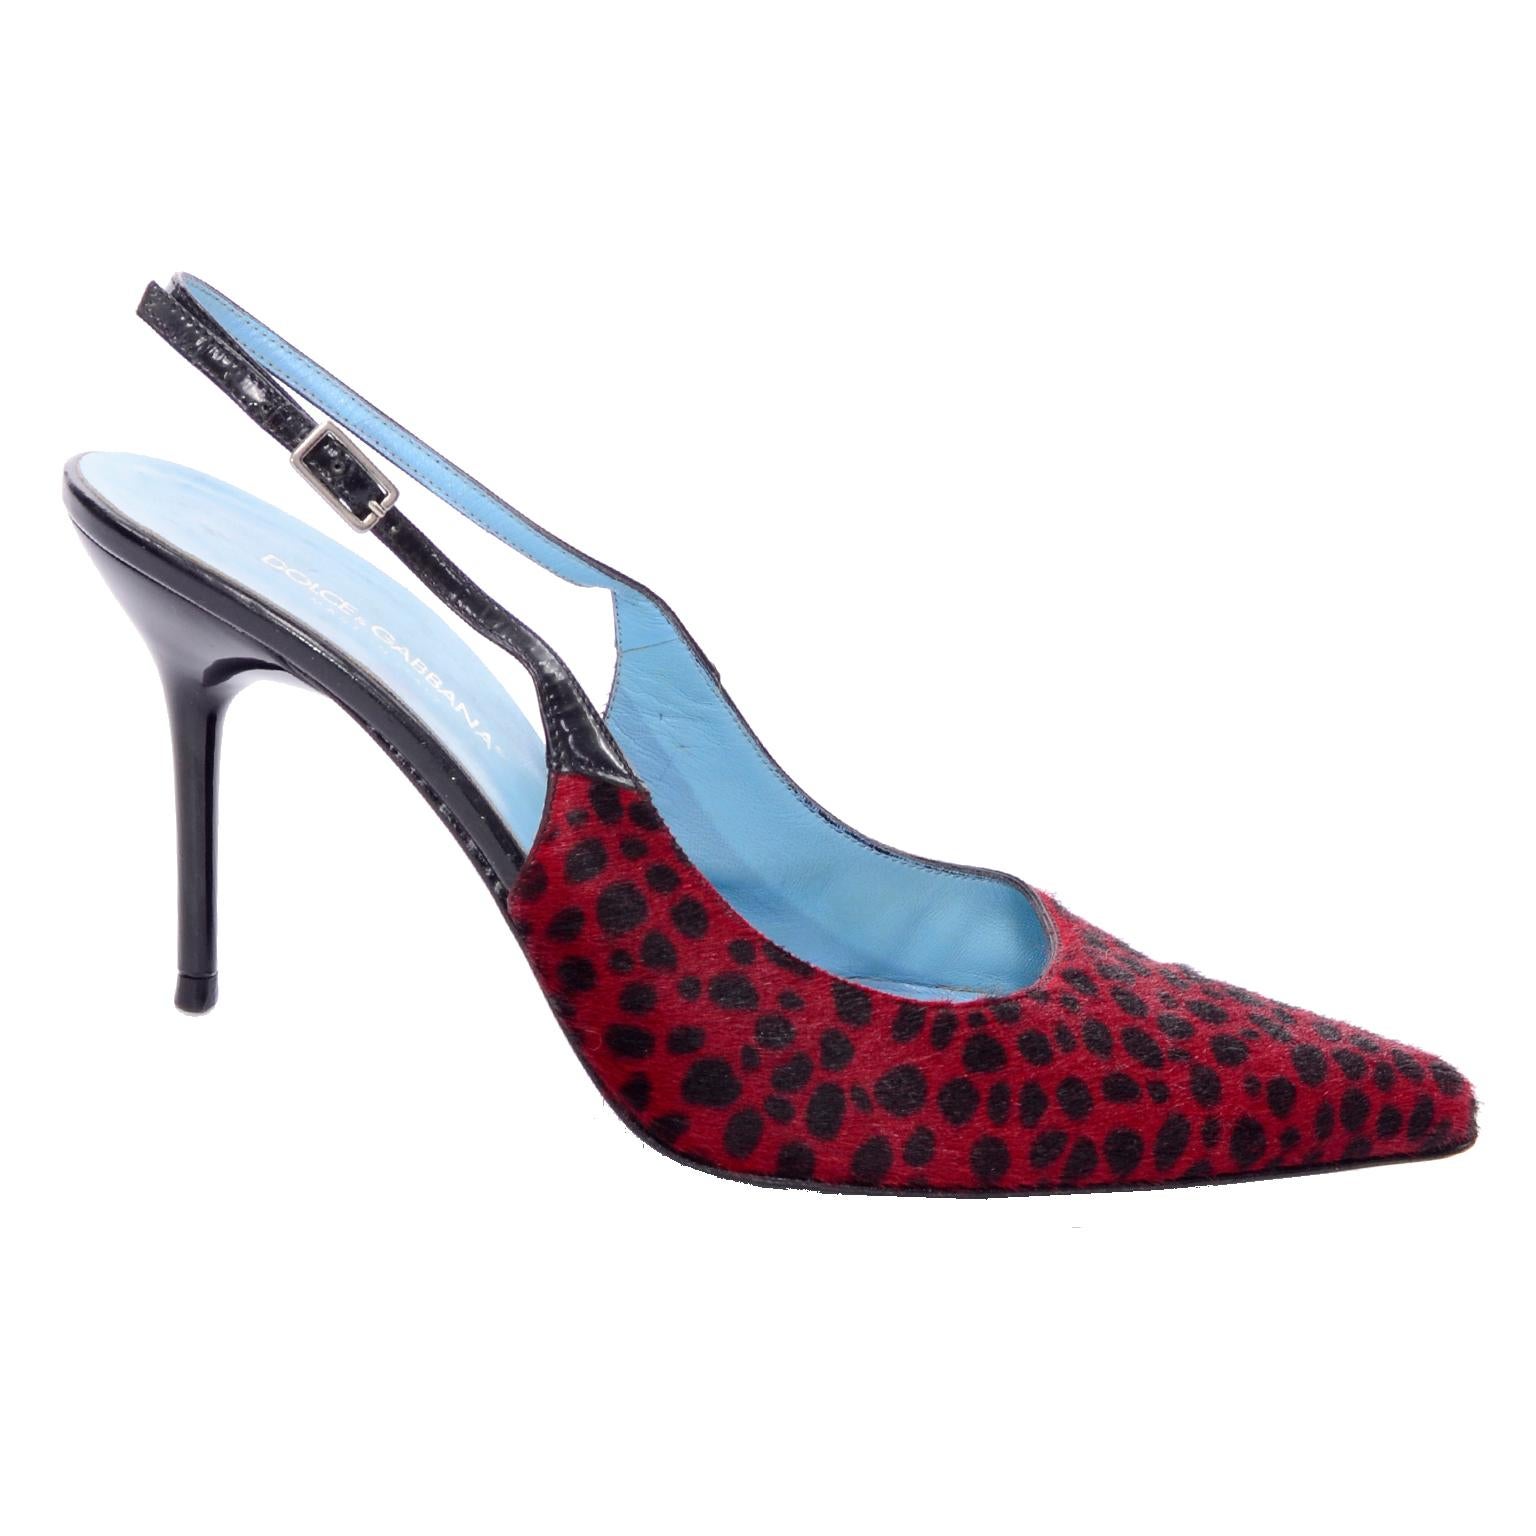 Dolce & Gabbana Animal Print Shoes in Red & Black Fur Slingback Heels 2